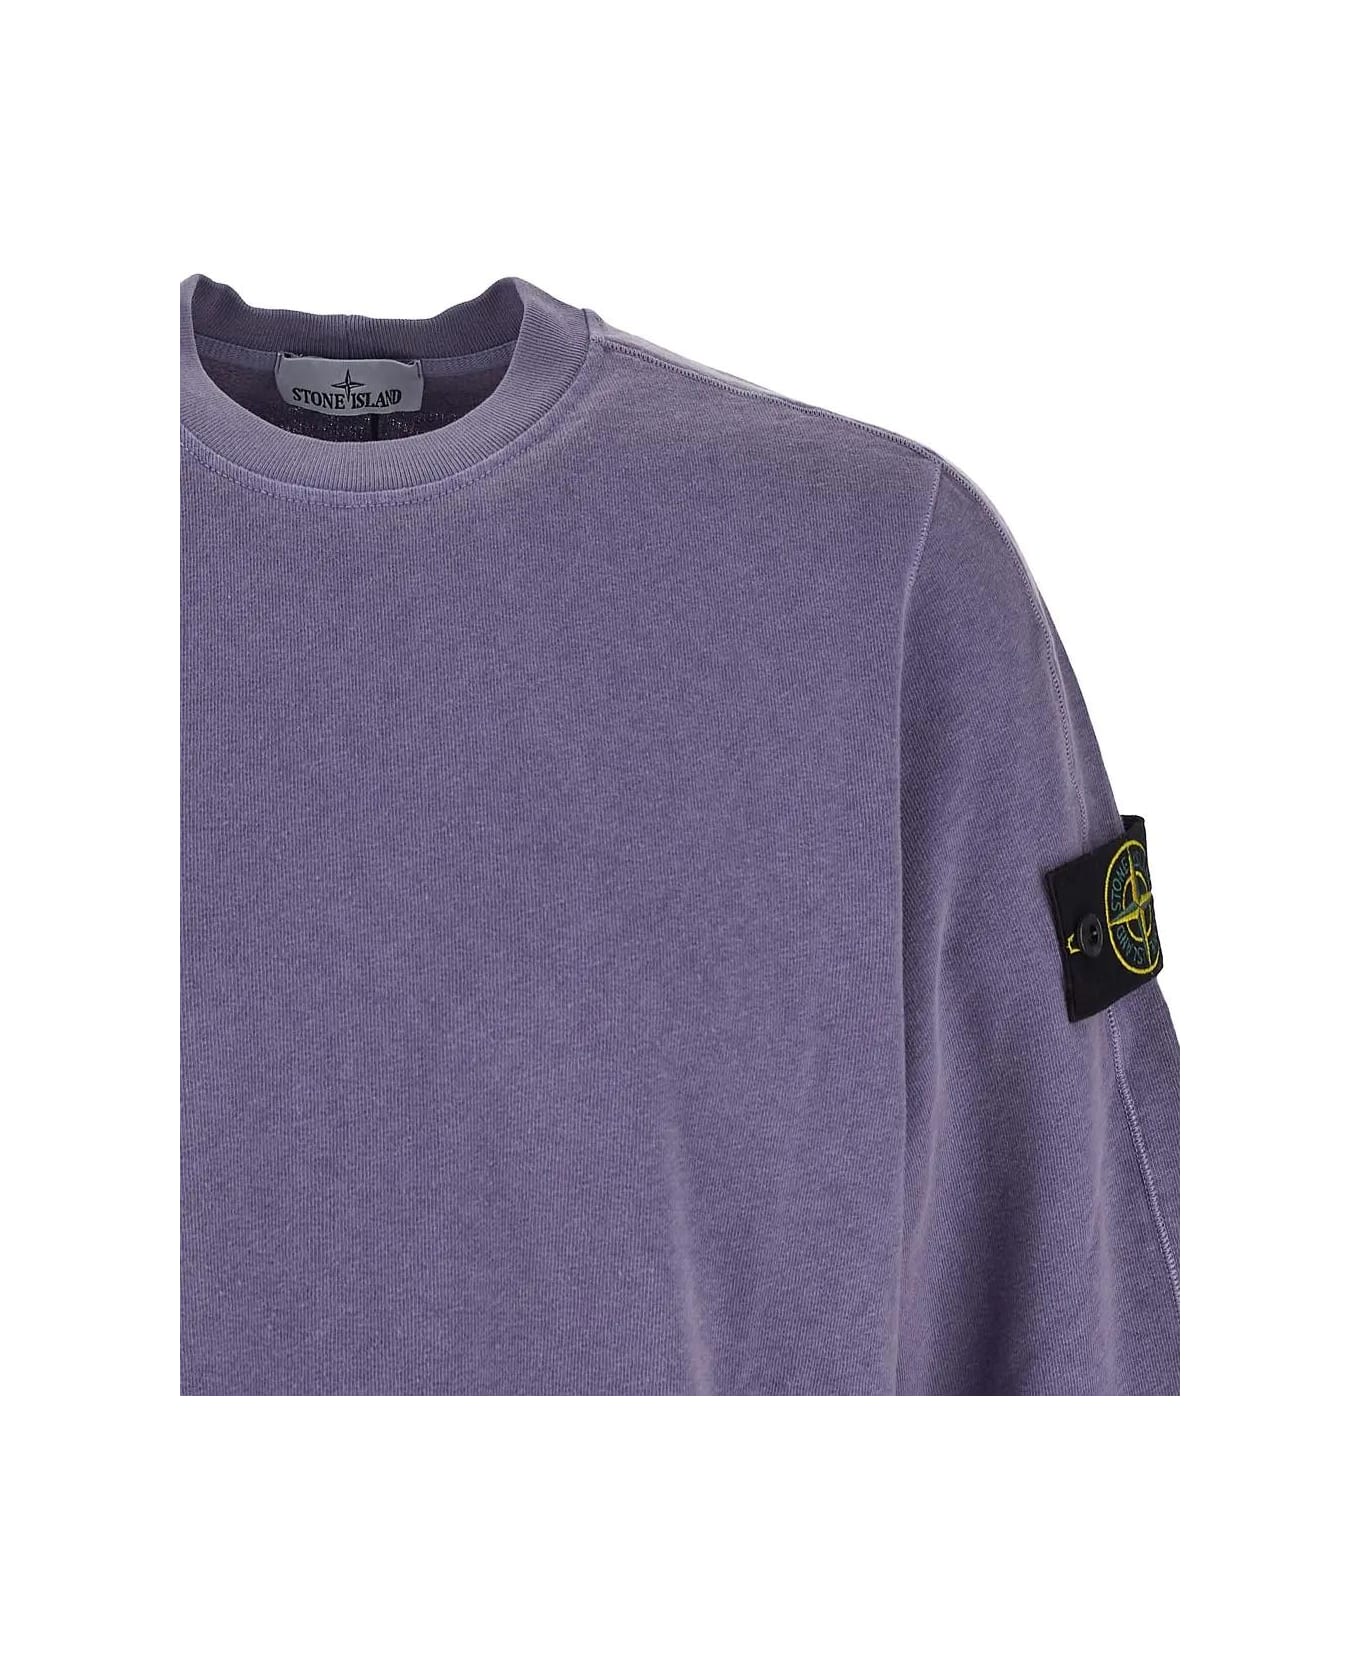 Stone Island Cotton Sweatshirt - PURPLE フリース